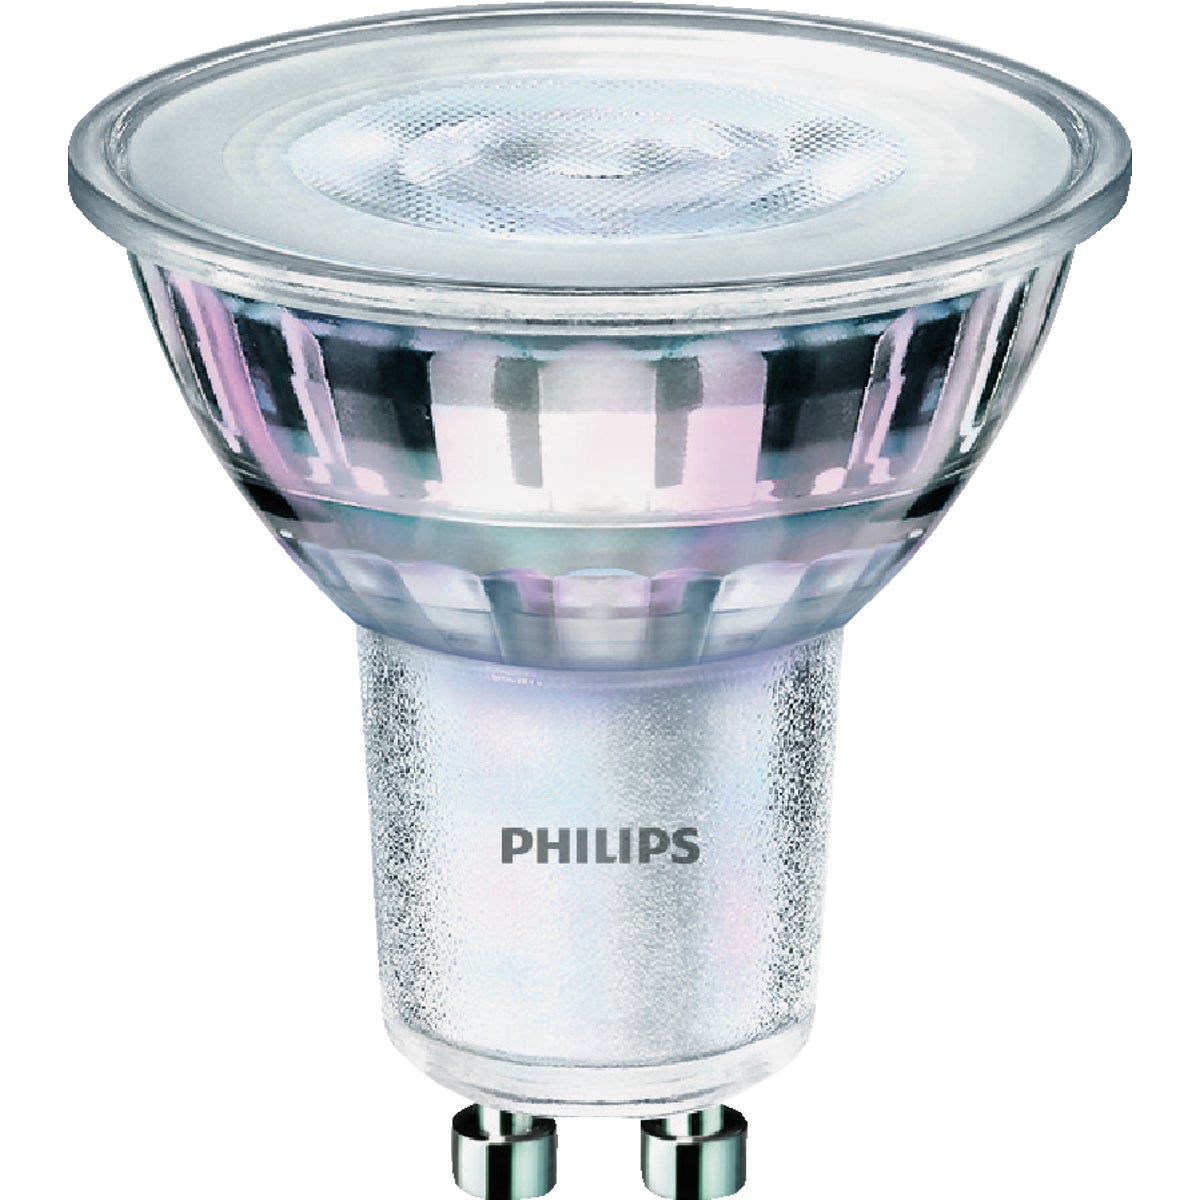 Philips 50W Equivalent Bright White PAR16 GU10 LED Spotlight Light Bulb